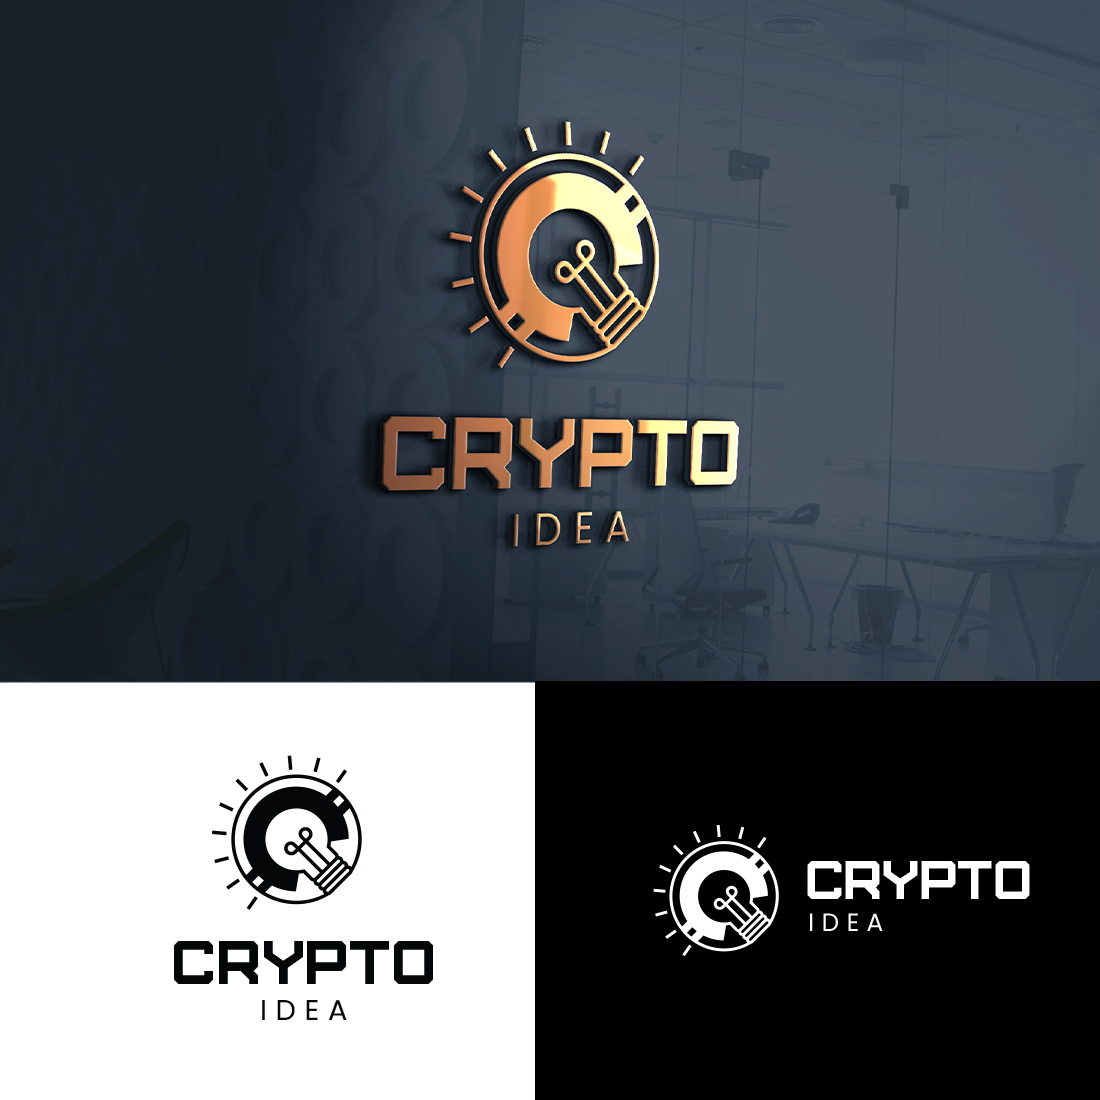 Crypto Idea Logo Template cover image.